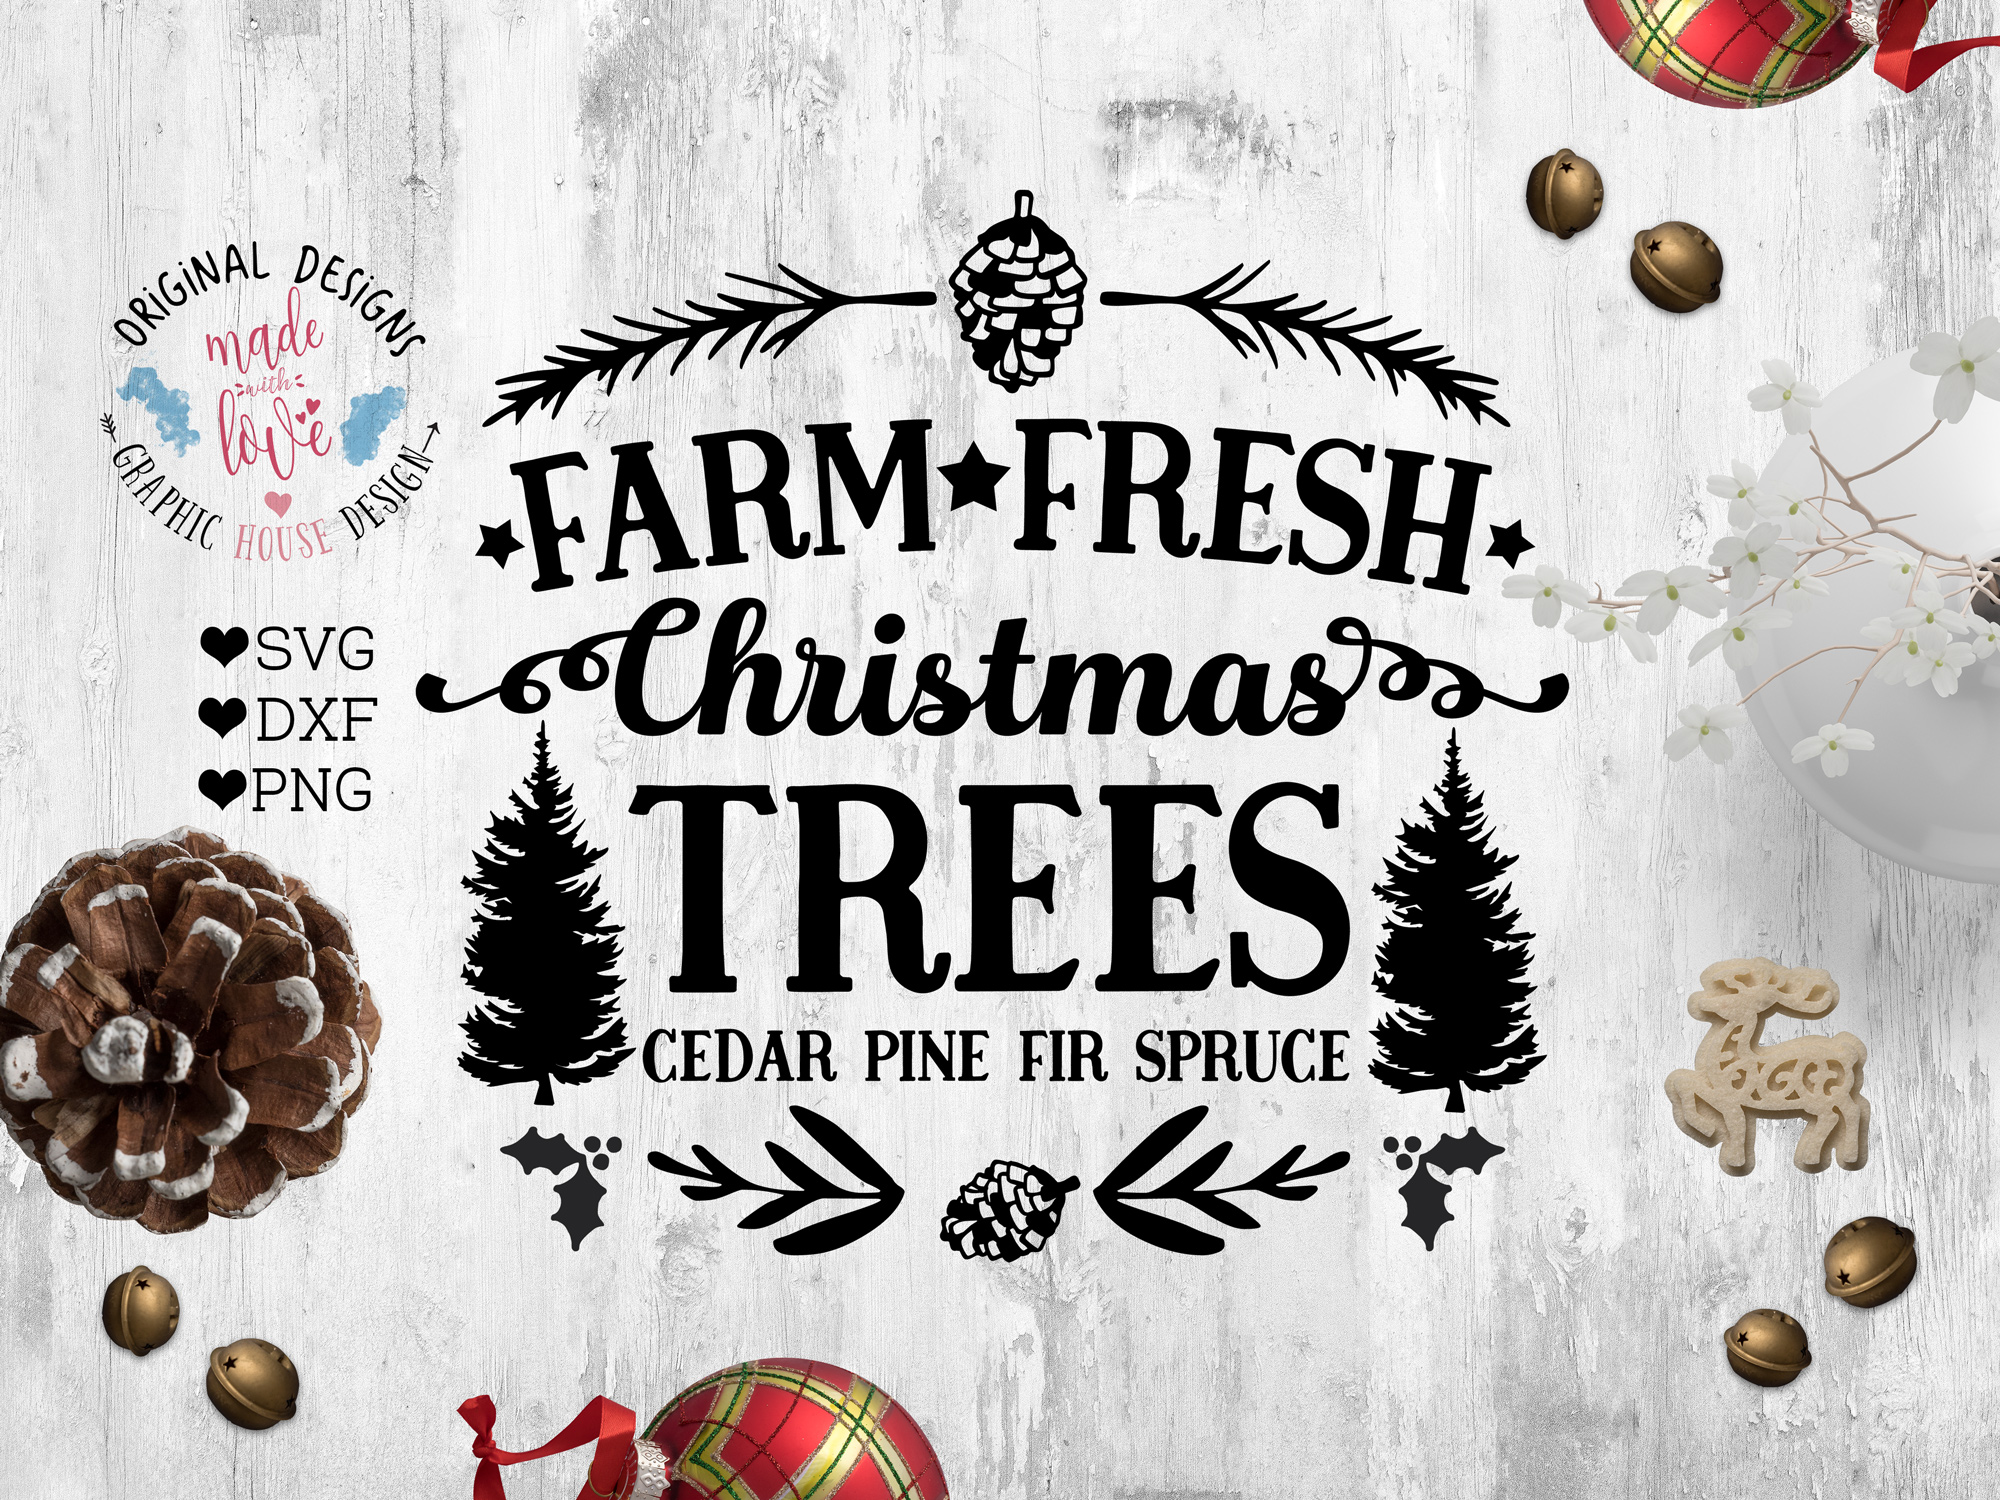 Farm Fresh Christmas Trees - Christmas Cut File example image 1.